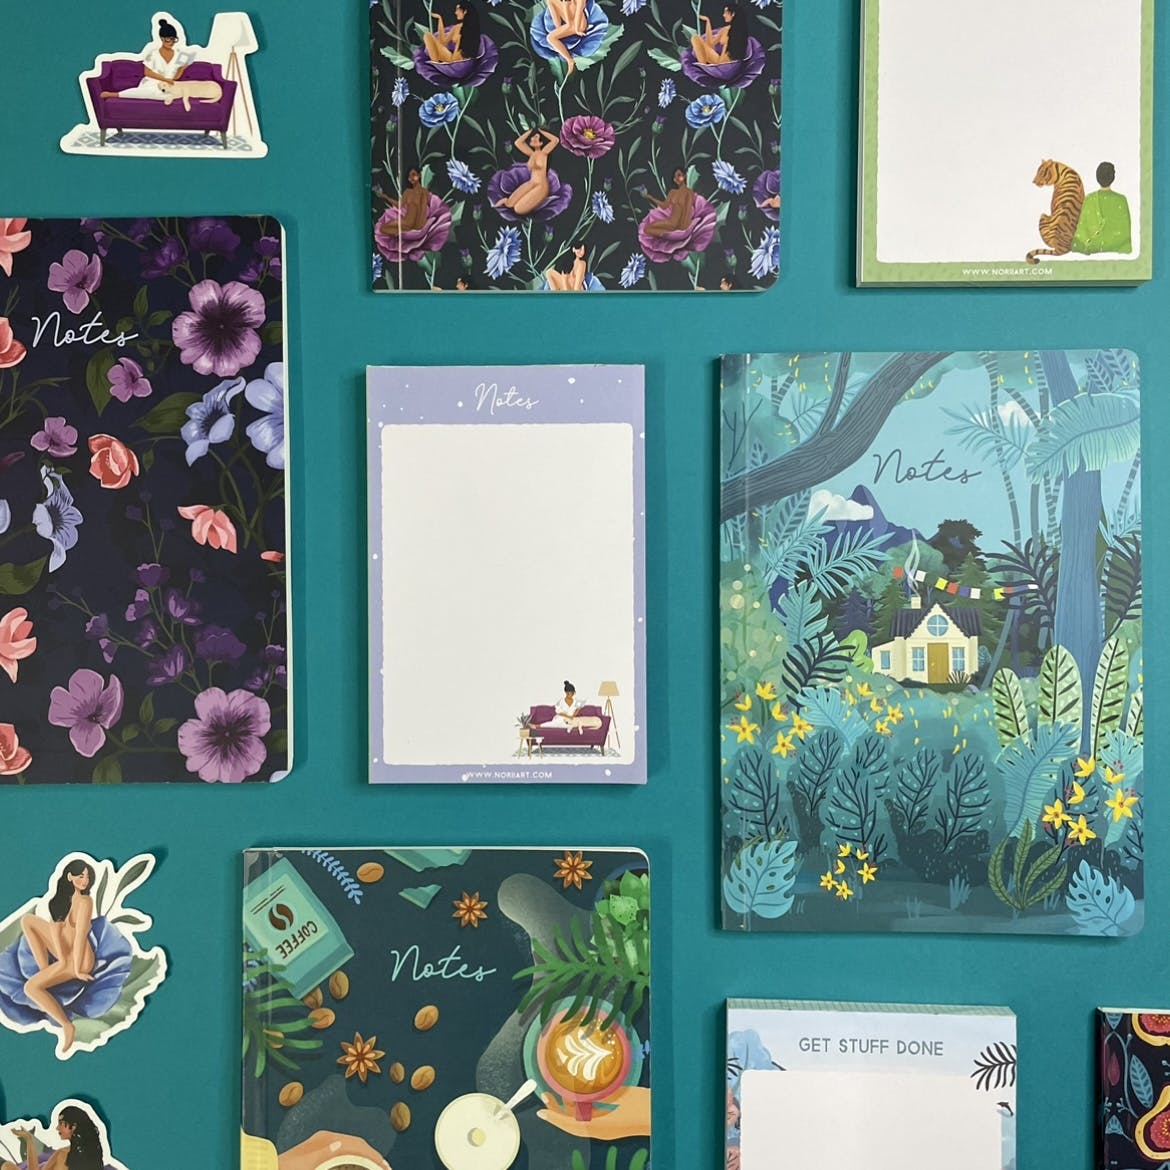 Green,Botany,Organism,Purple,Art,Creative arts,Rectangle,Games,Pattern,Room